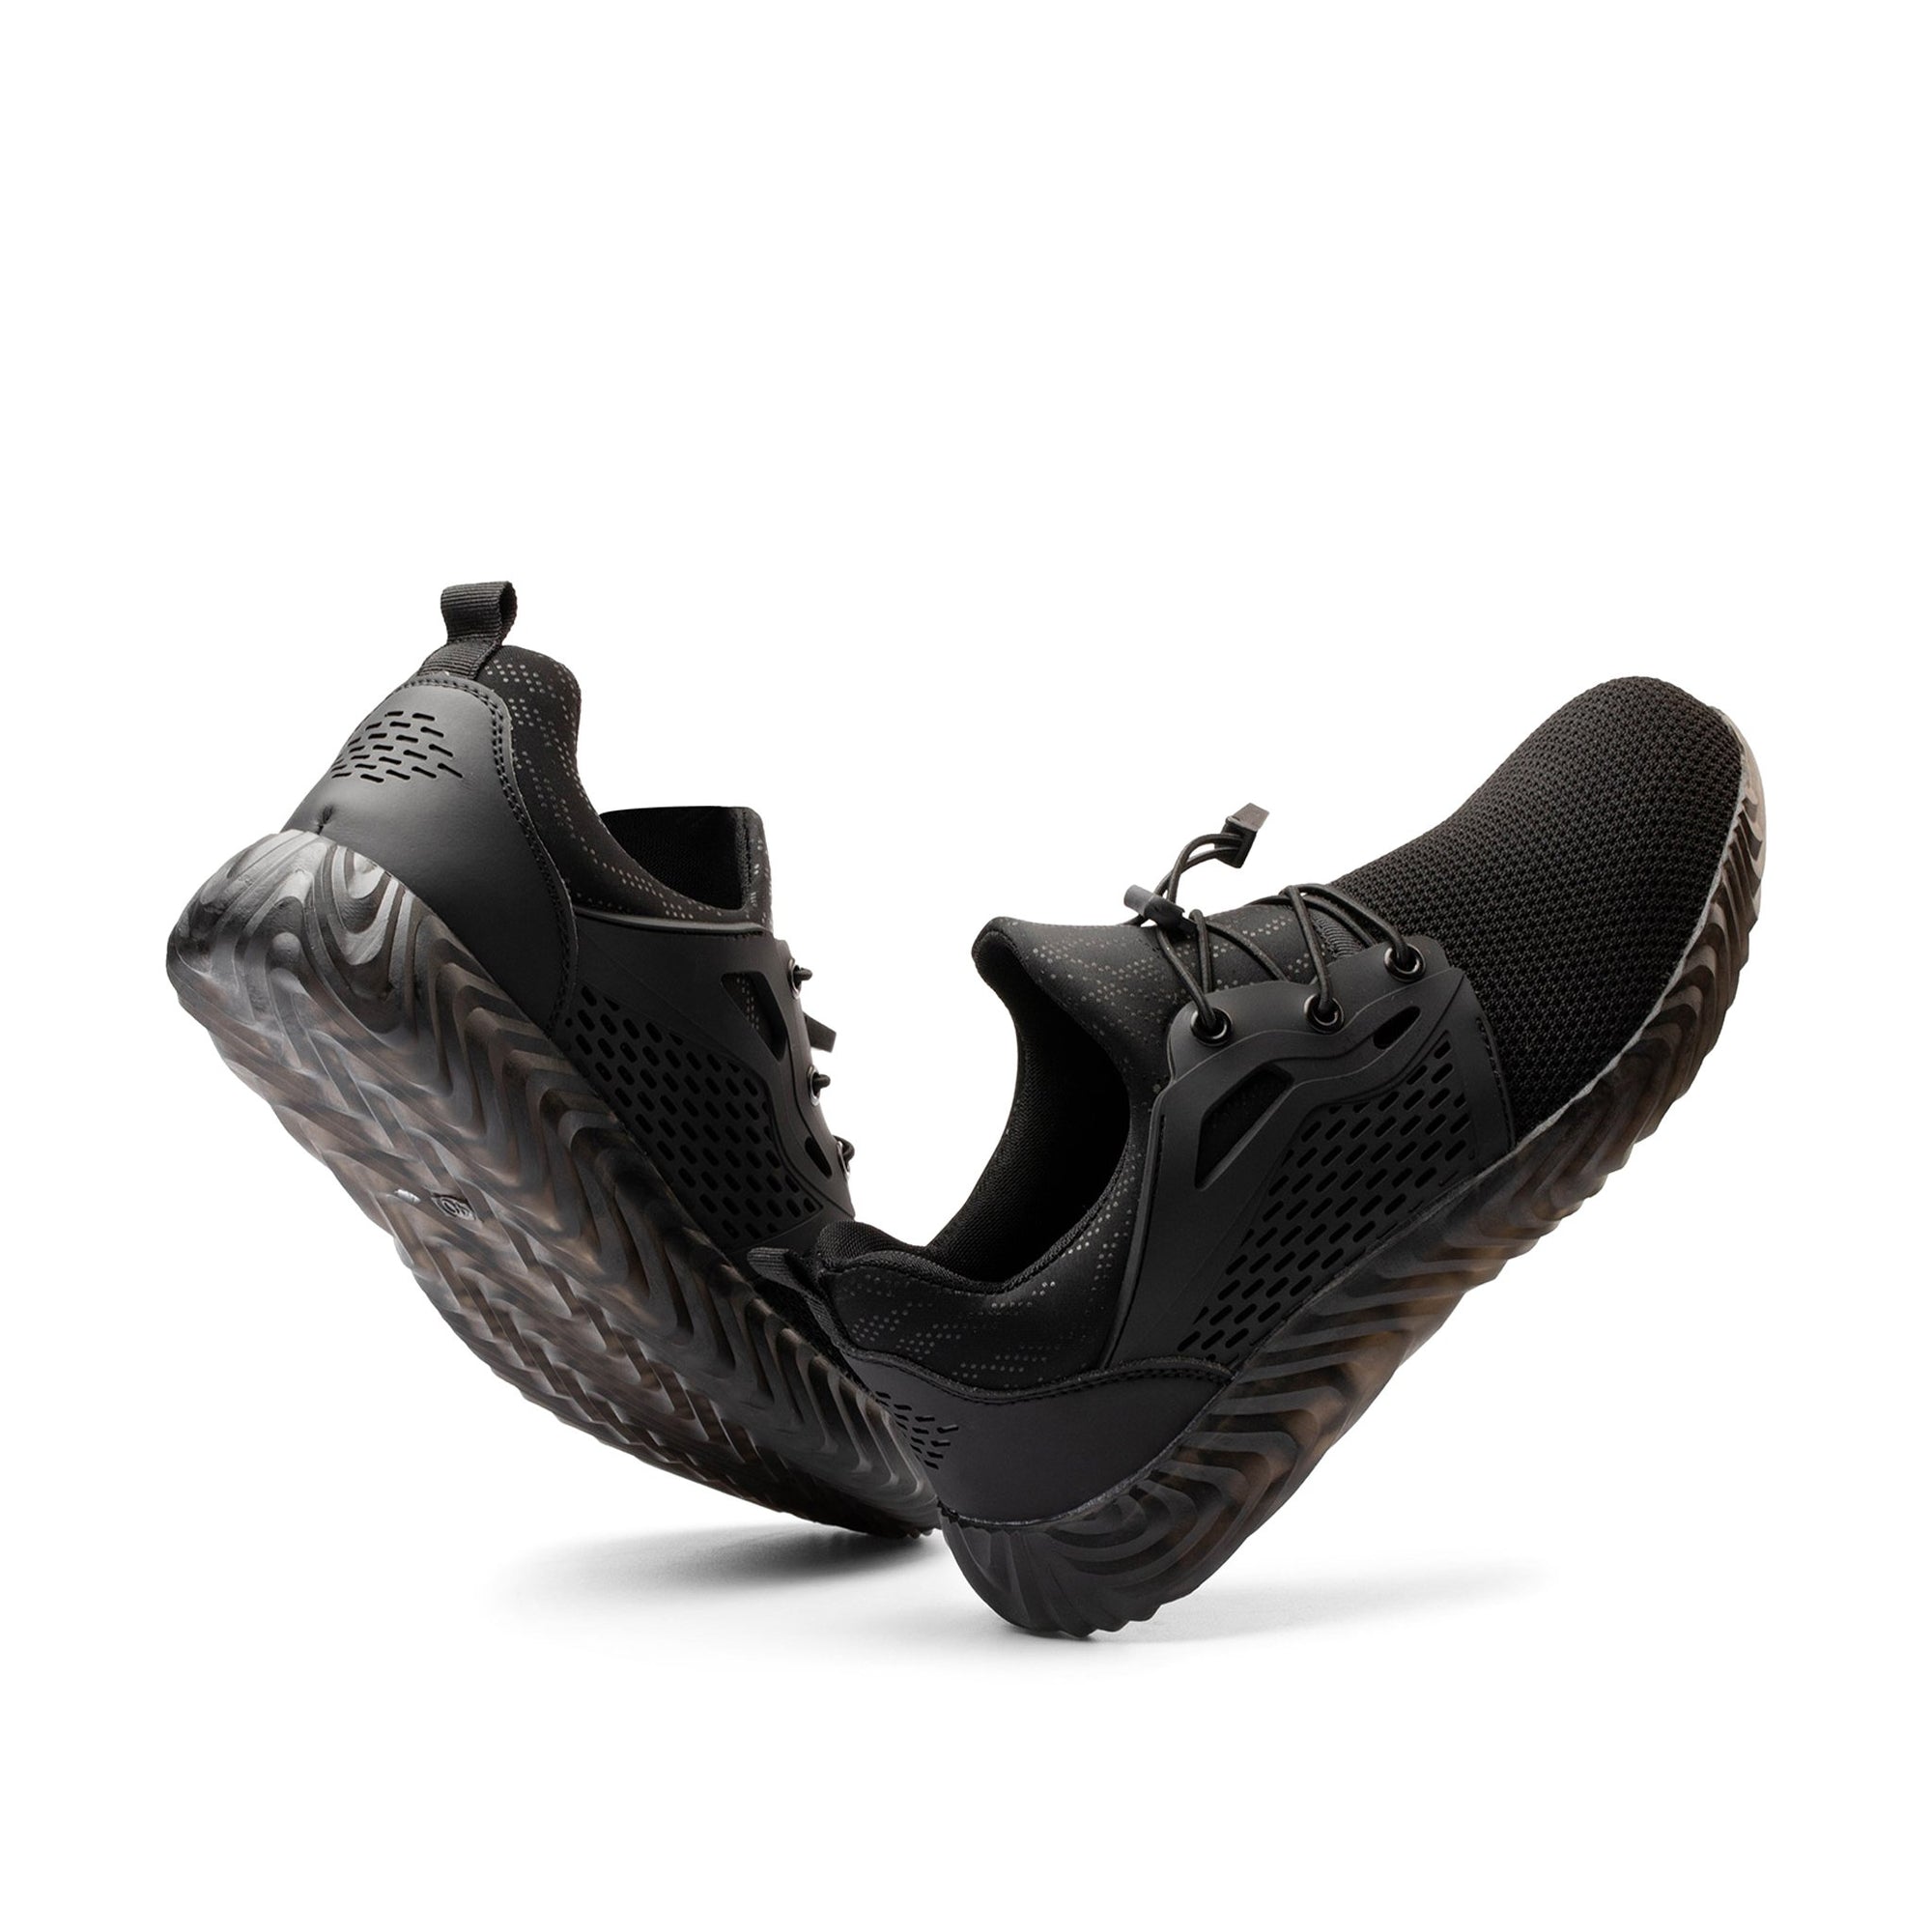 Ryder 1.5 Indestructible Shoes - Indestructible Shoes